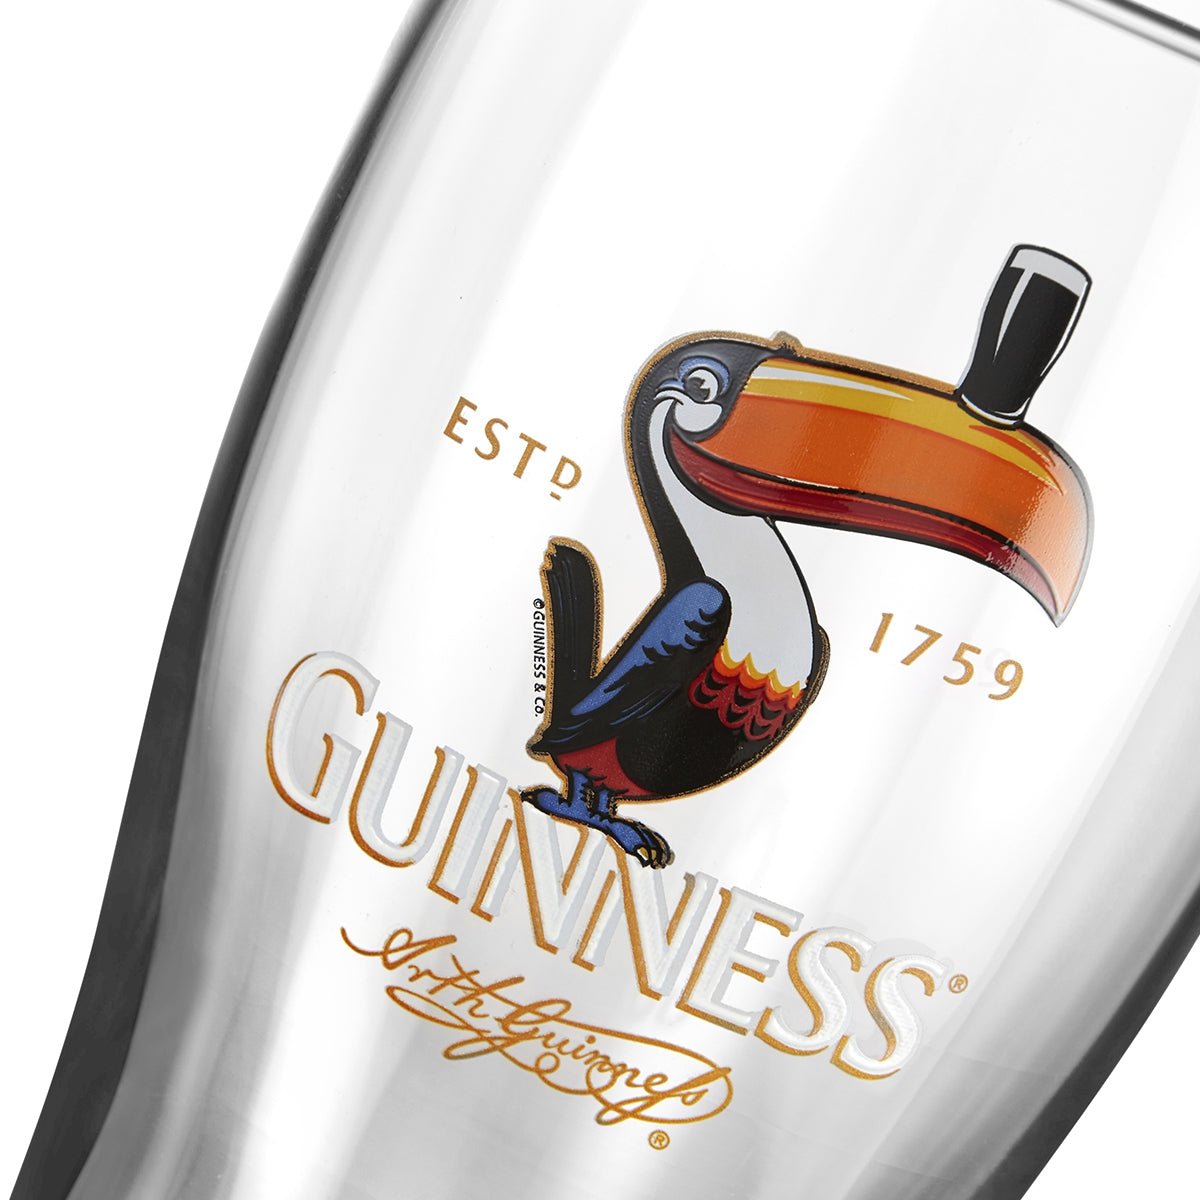 Guinness UK Toucan Pint Glass featuring Guinness UK branding.